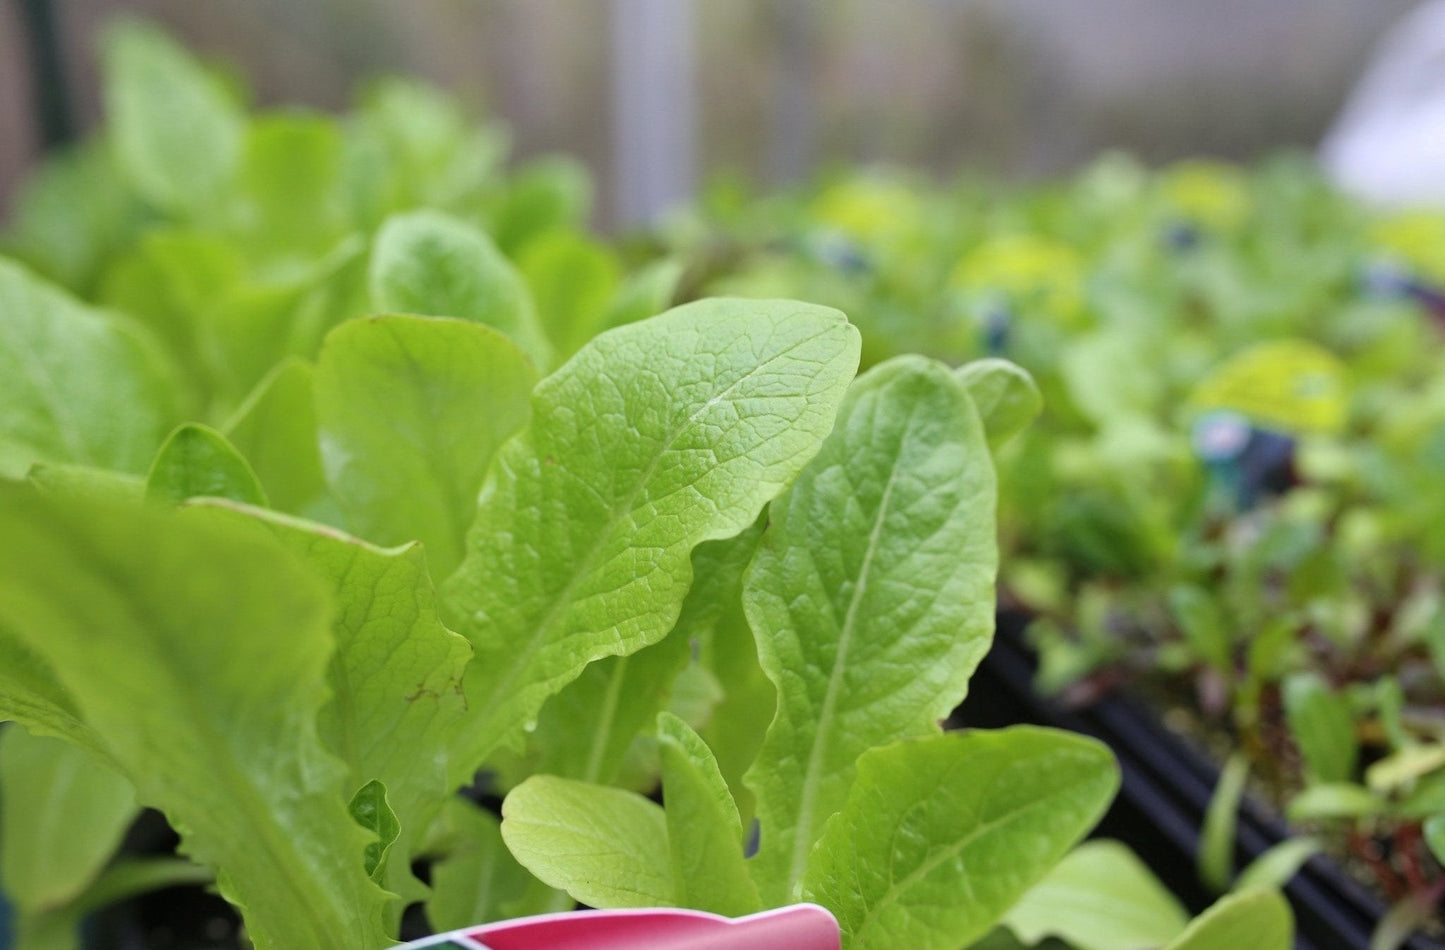 Lettuce 'Cut and Come Again' - 6 x Plug Plant Pack - AcquaGarden